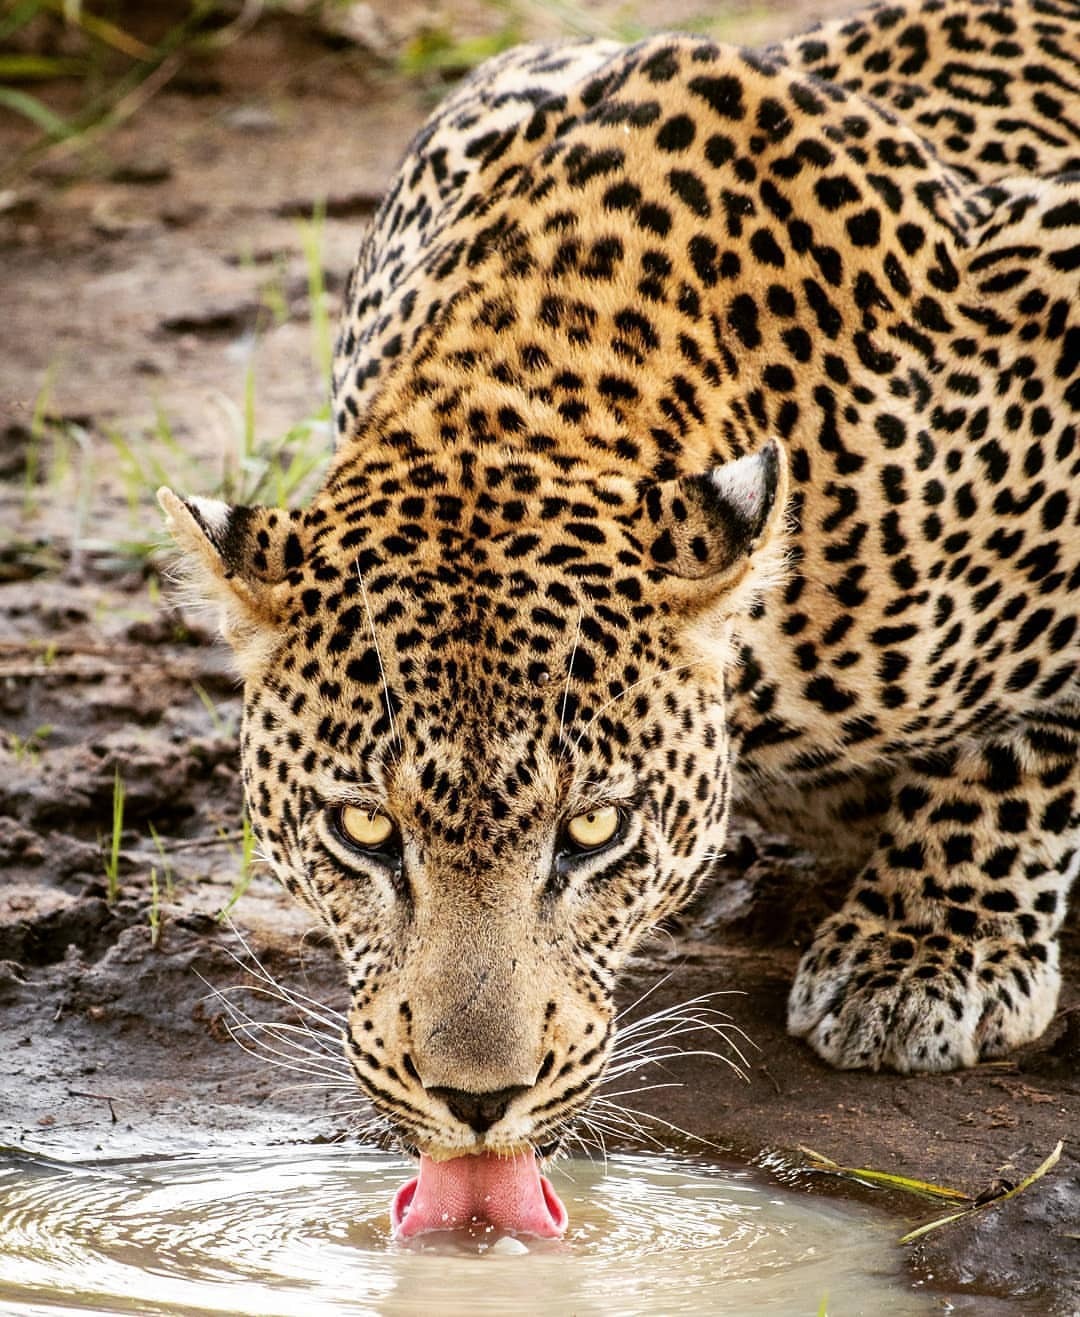 geographicwild:
“.
Photo by @johansmalman Male Leopard Nstongwaan having a drink. Shindzela Tented Camp.#nature #wildlife #drink #shindzelatc #timbavati #leopard #krugernationalpark #leopards
”